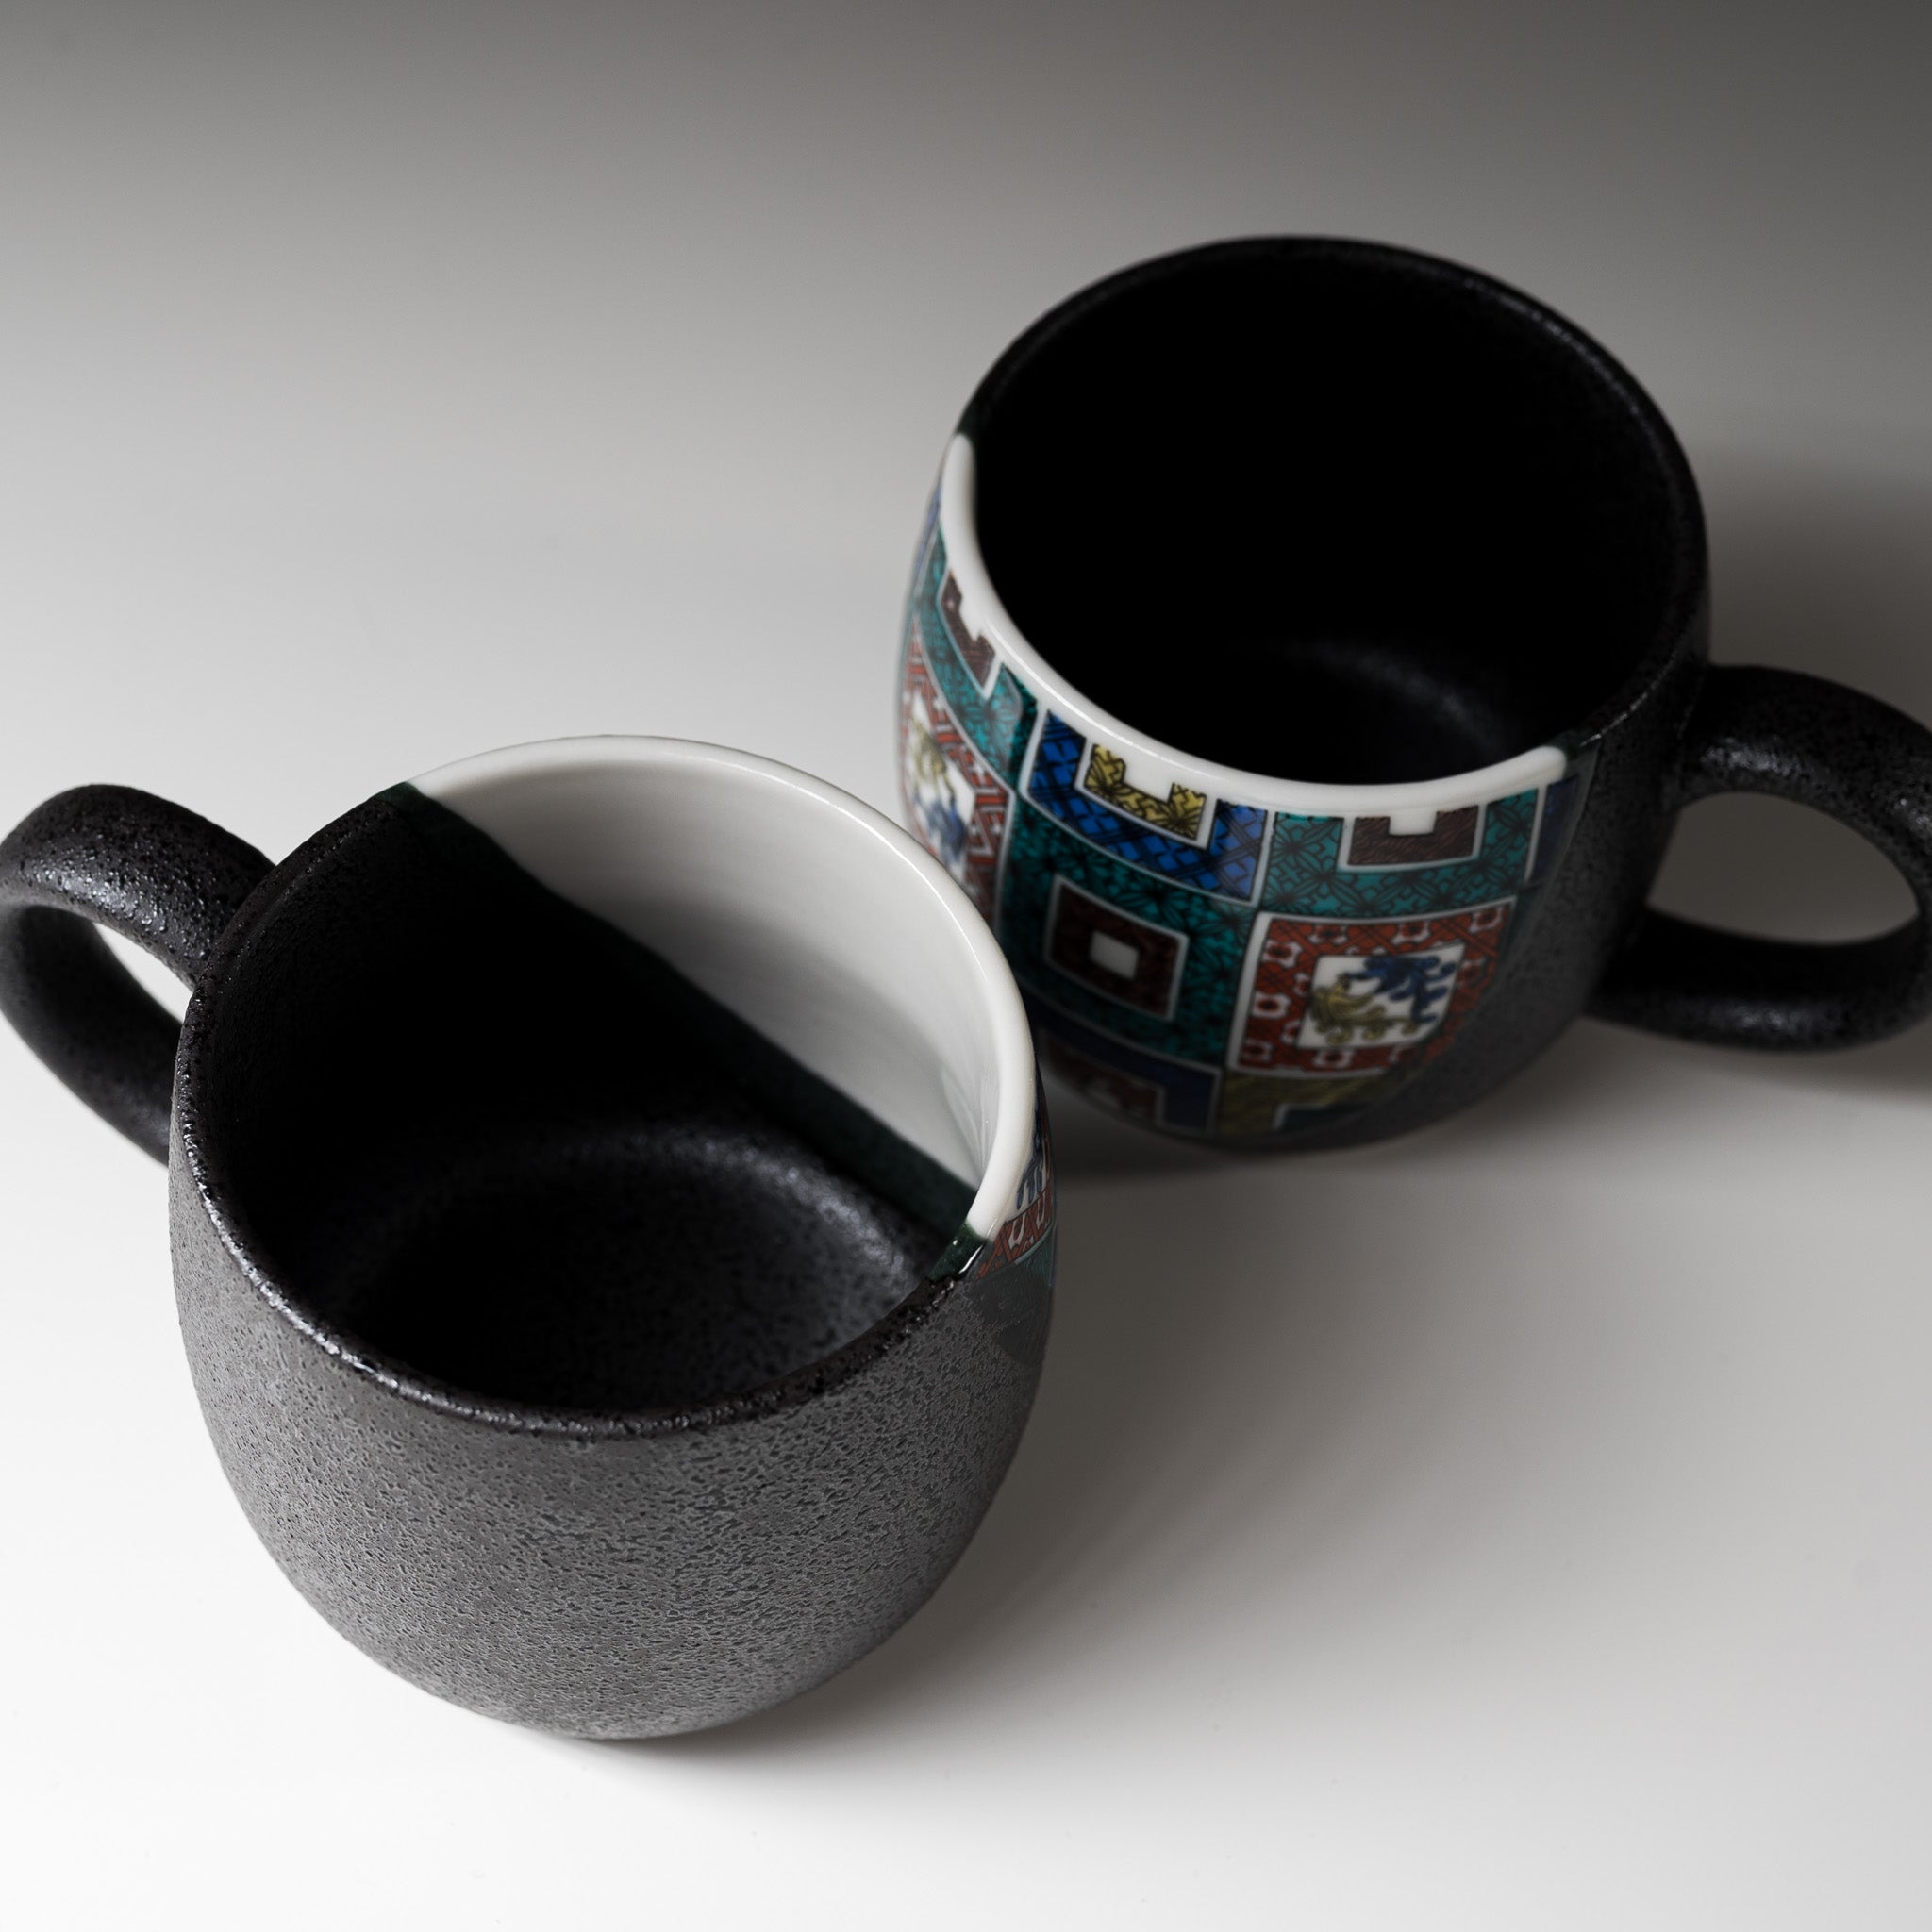 Kutani ware Pair Mug Cup - Stone Tatami / 九谷焼 石畳 ペアマグカップ